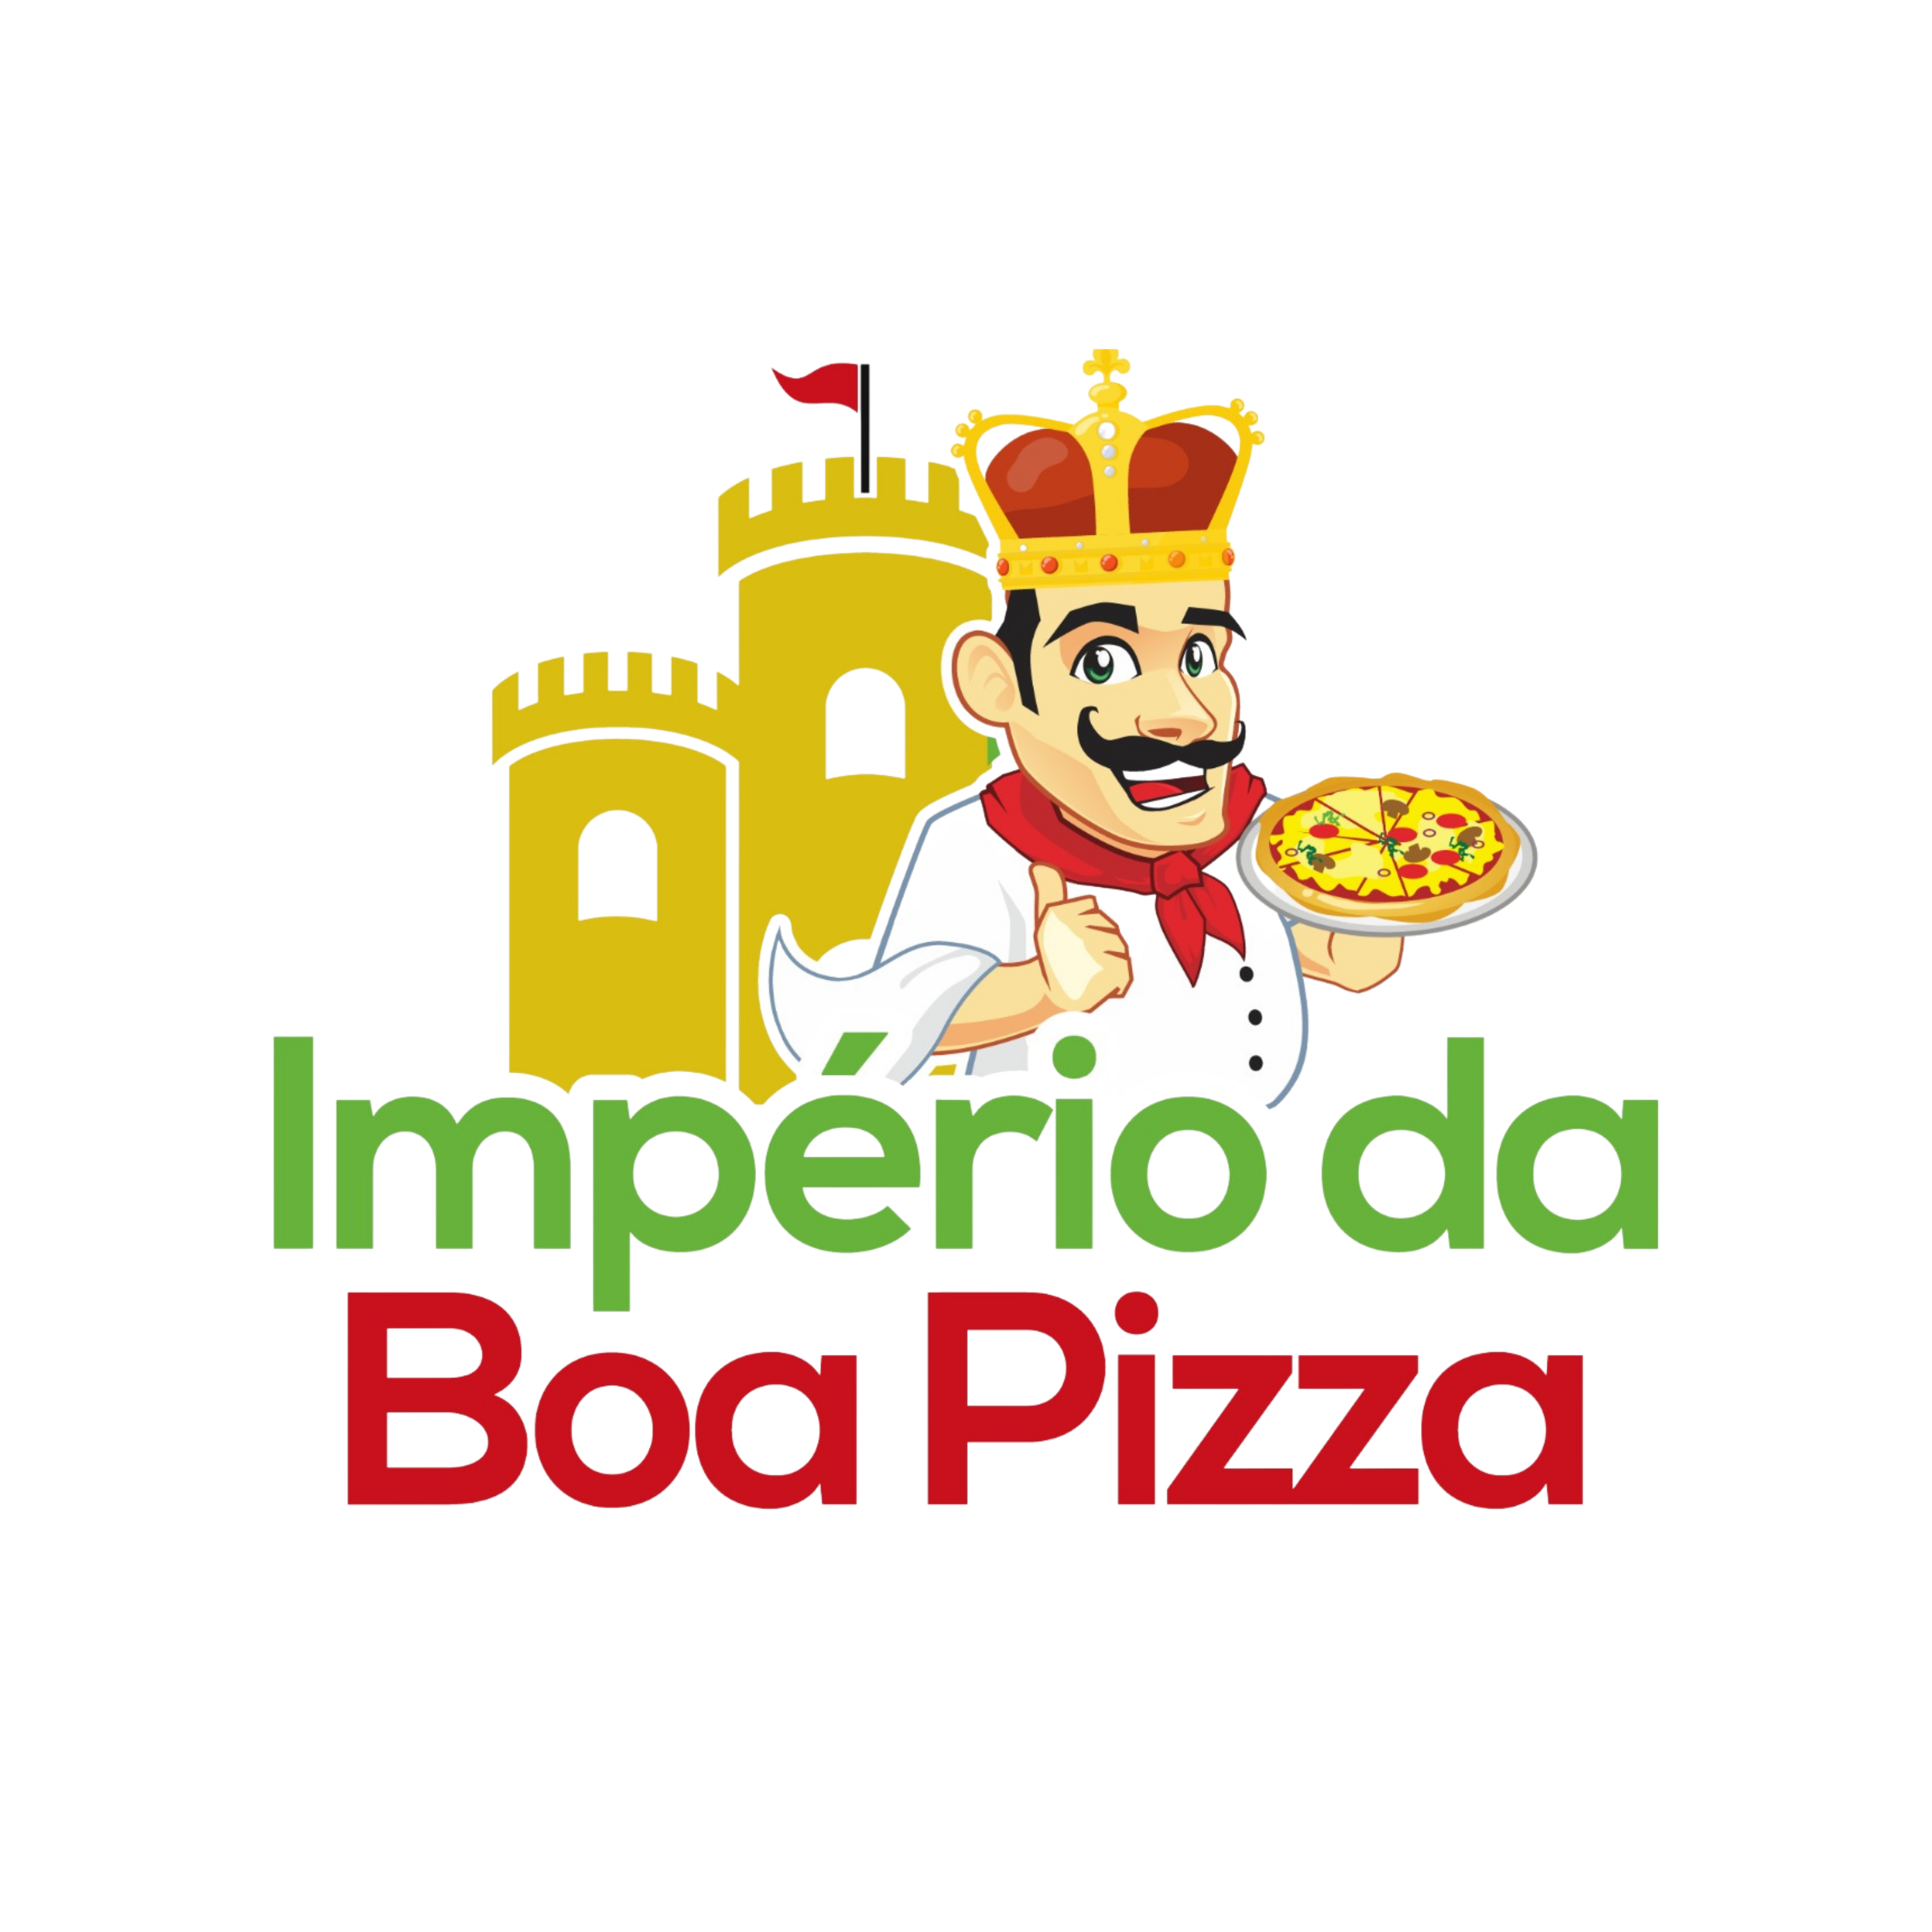 Pizzaria Império da Pizza